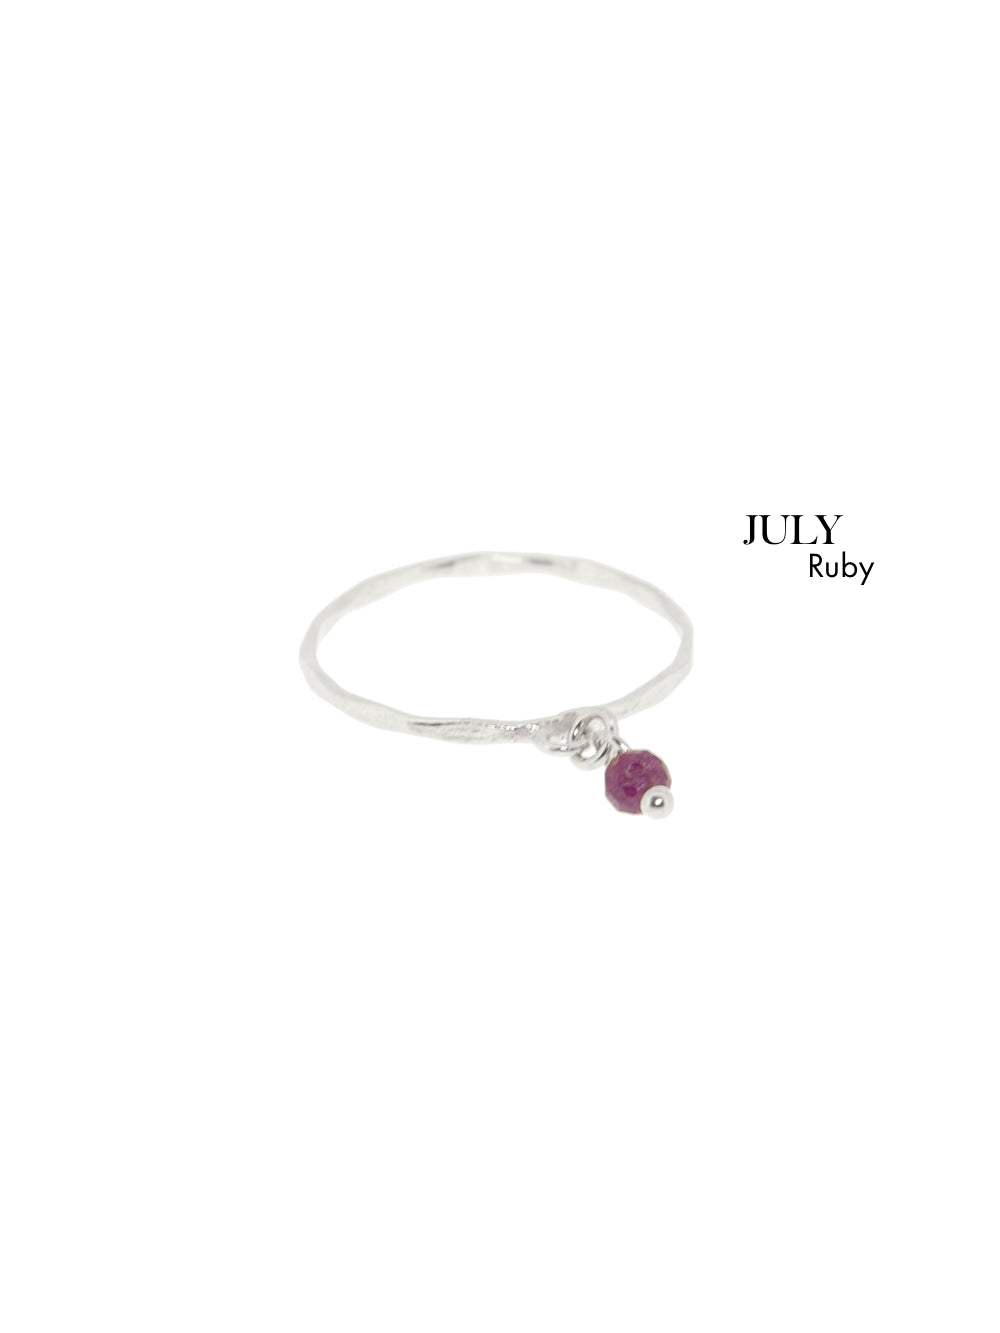 Birthstone ring July - Ruby | 925 Sterling Silver